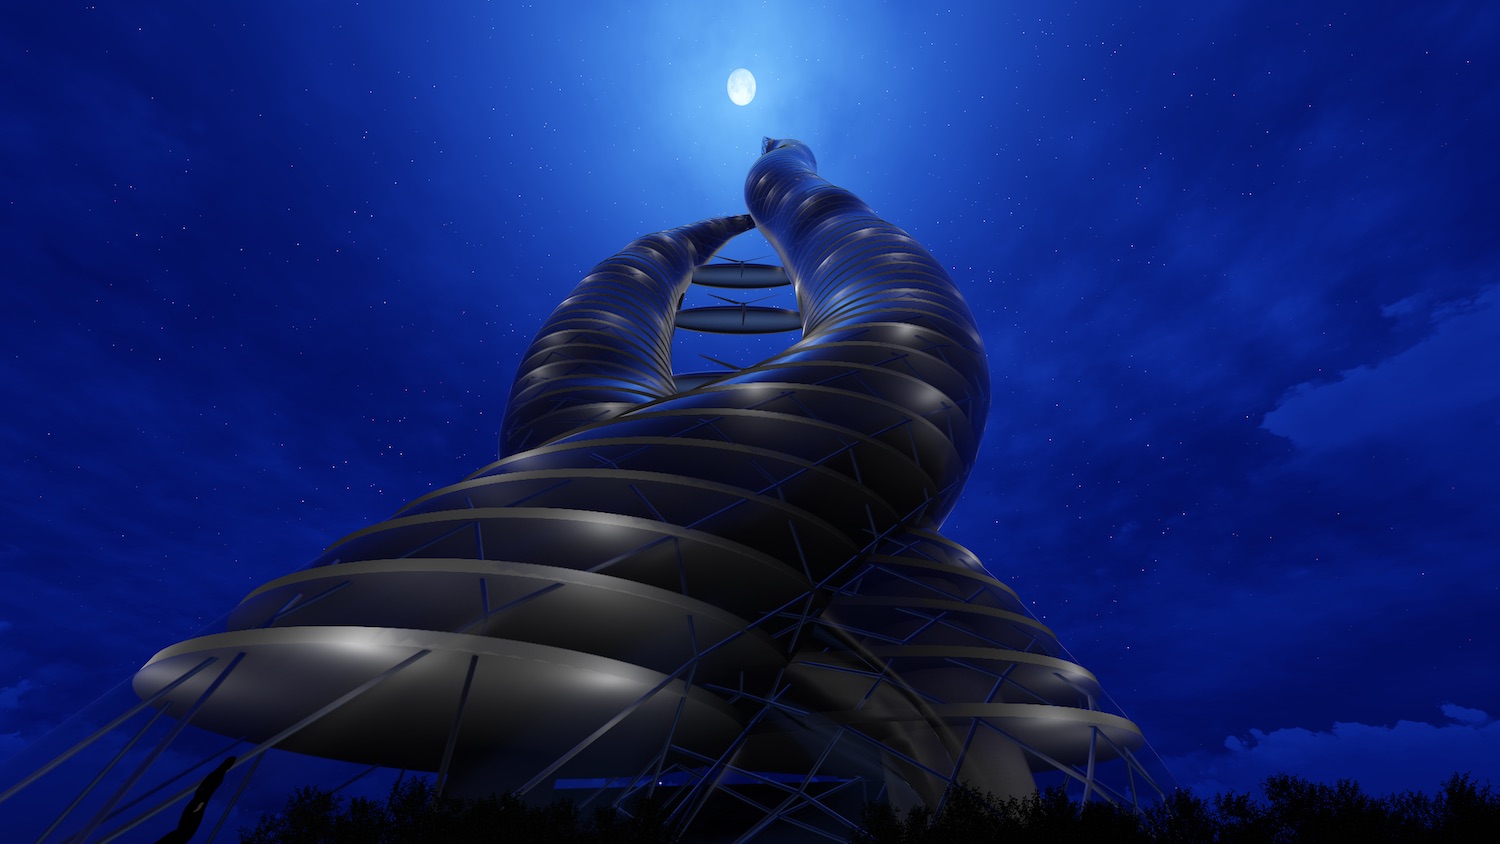 spiral skyscraper at night 